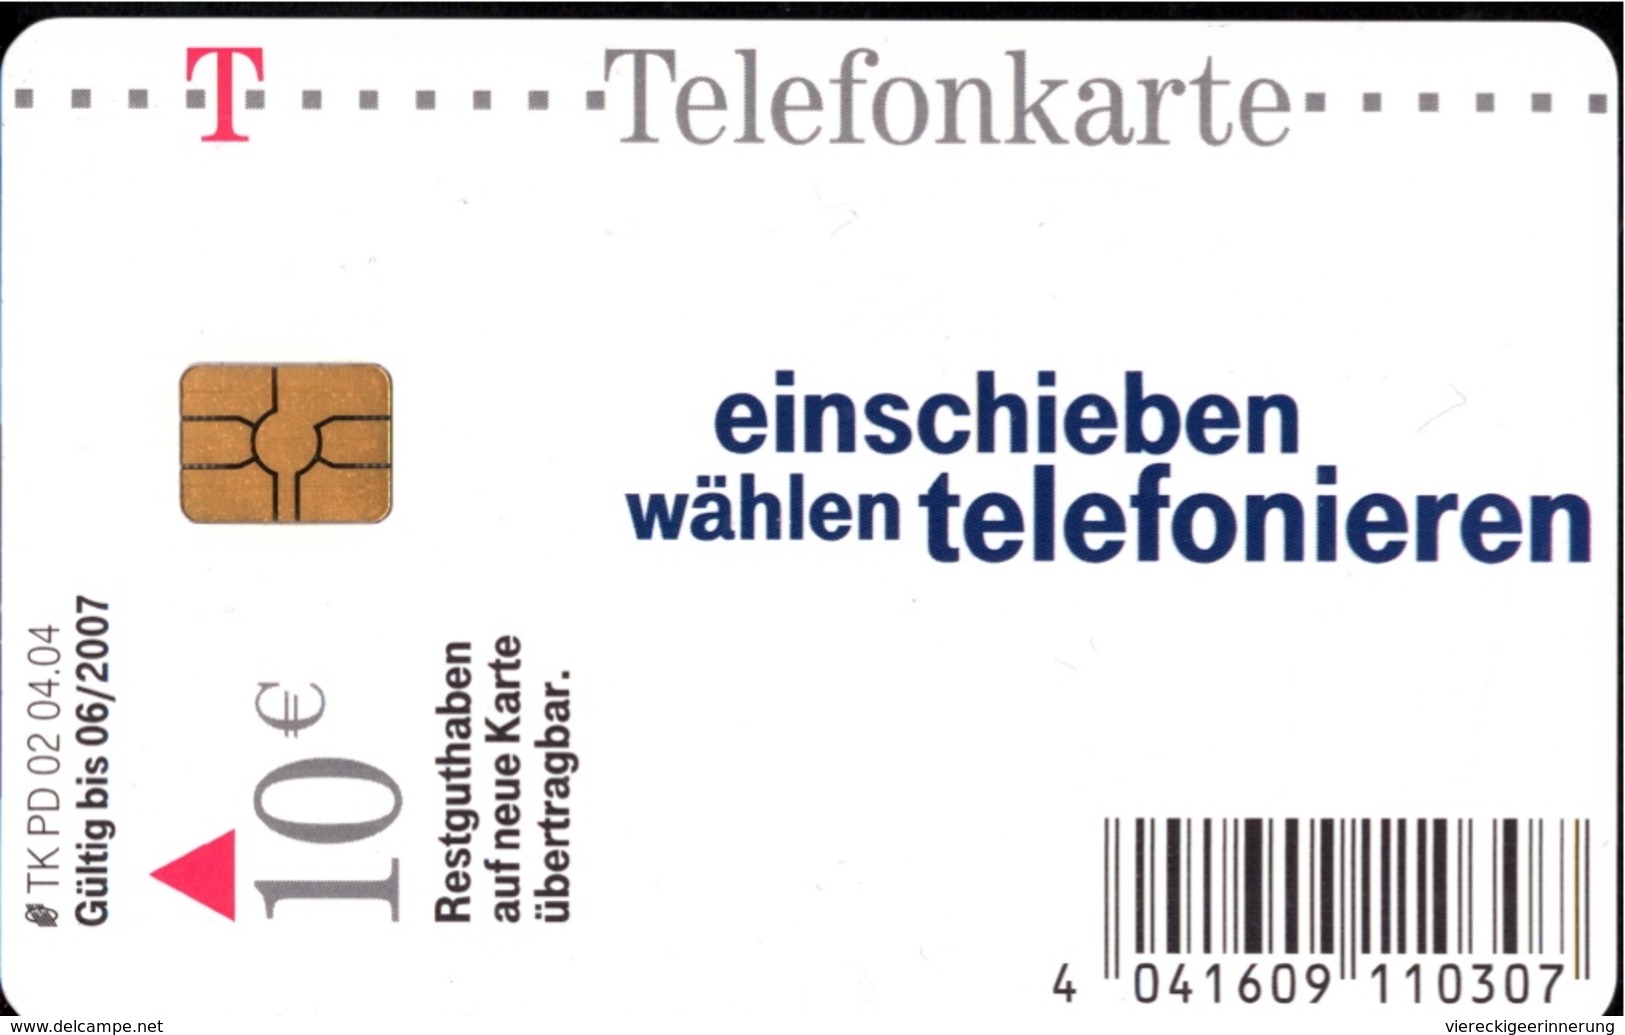 ! 10 € Telefonkarte, Telecarte, Phonecard, 2004, PD02, Germany - P & PD-Series : Guichet - D. Telekom